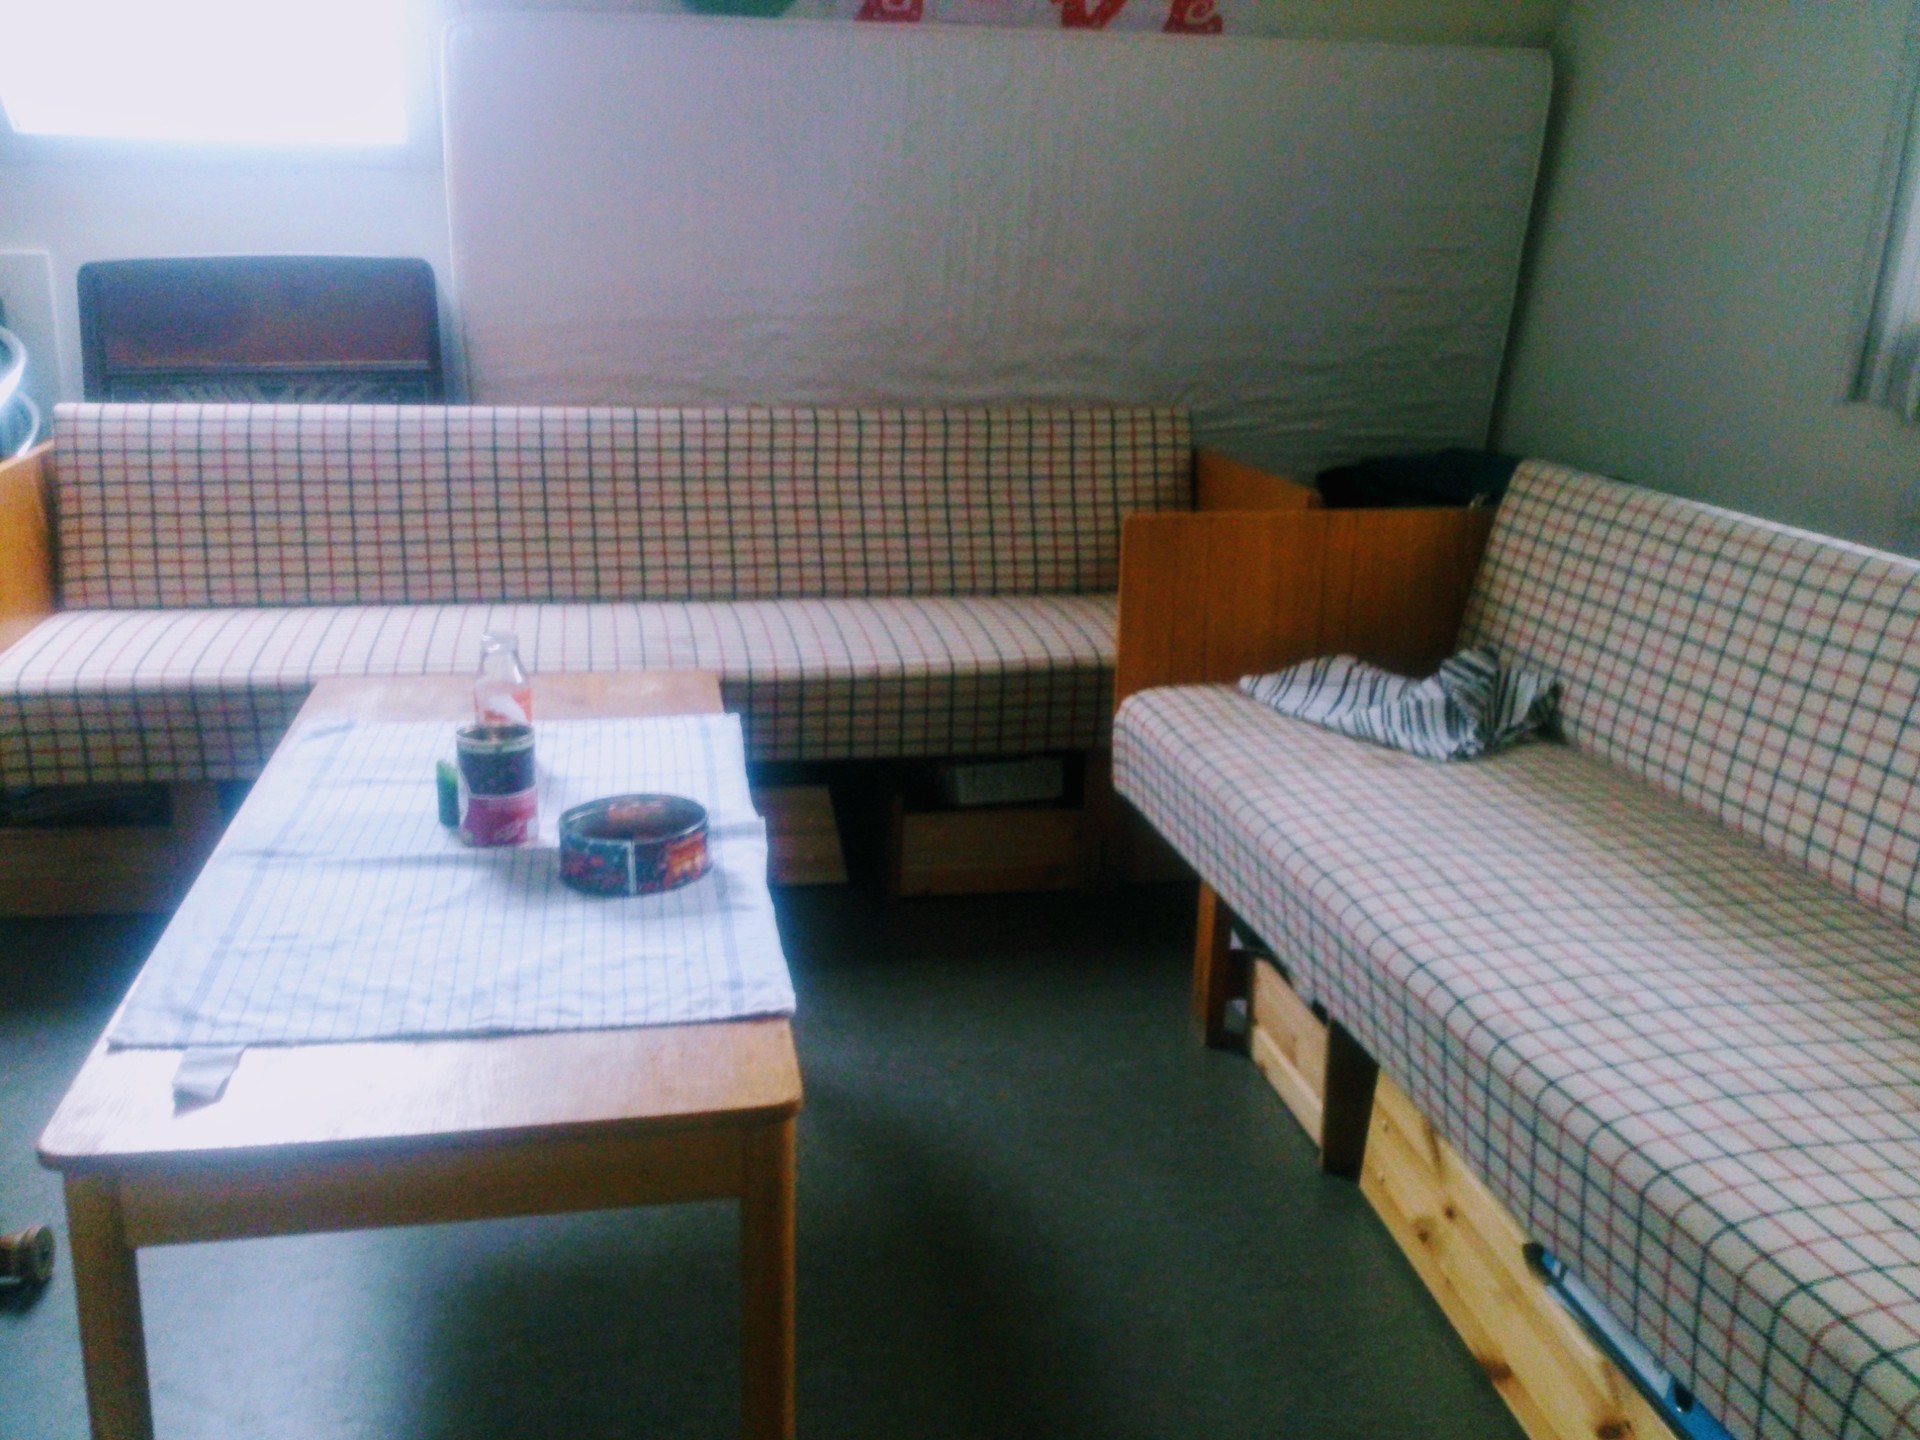 My accommodation in Copenhagen